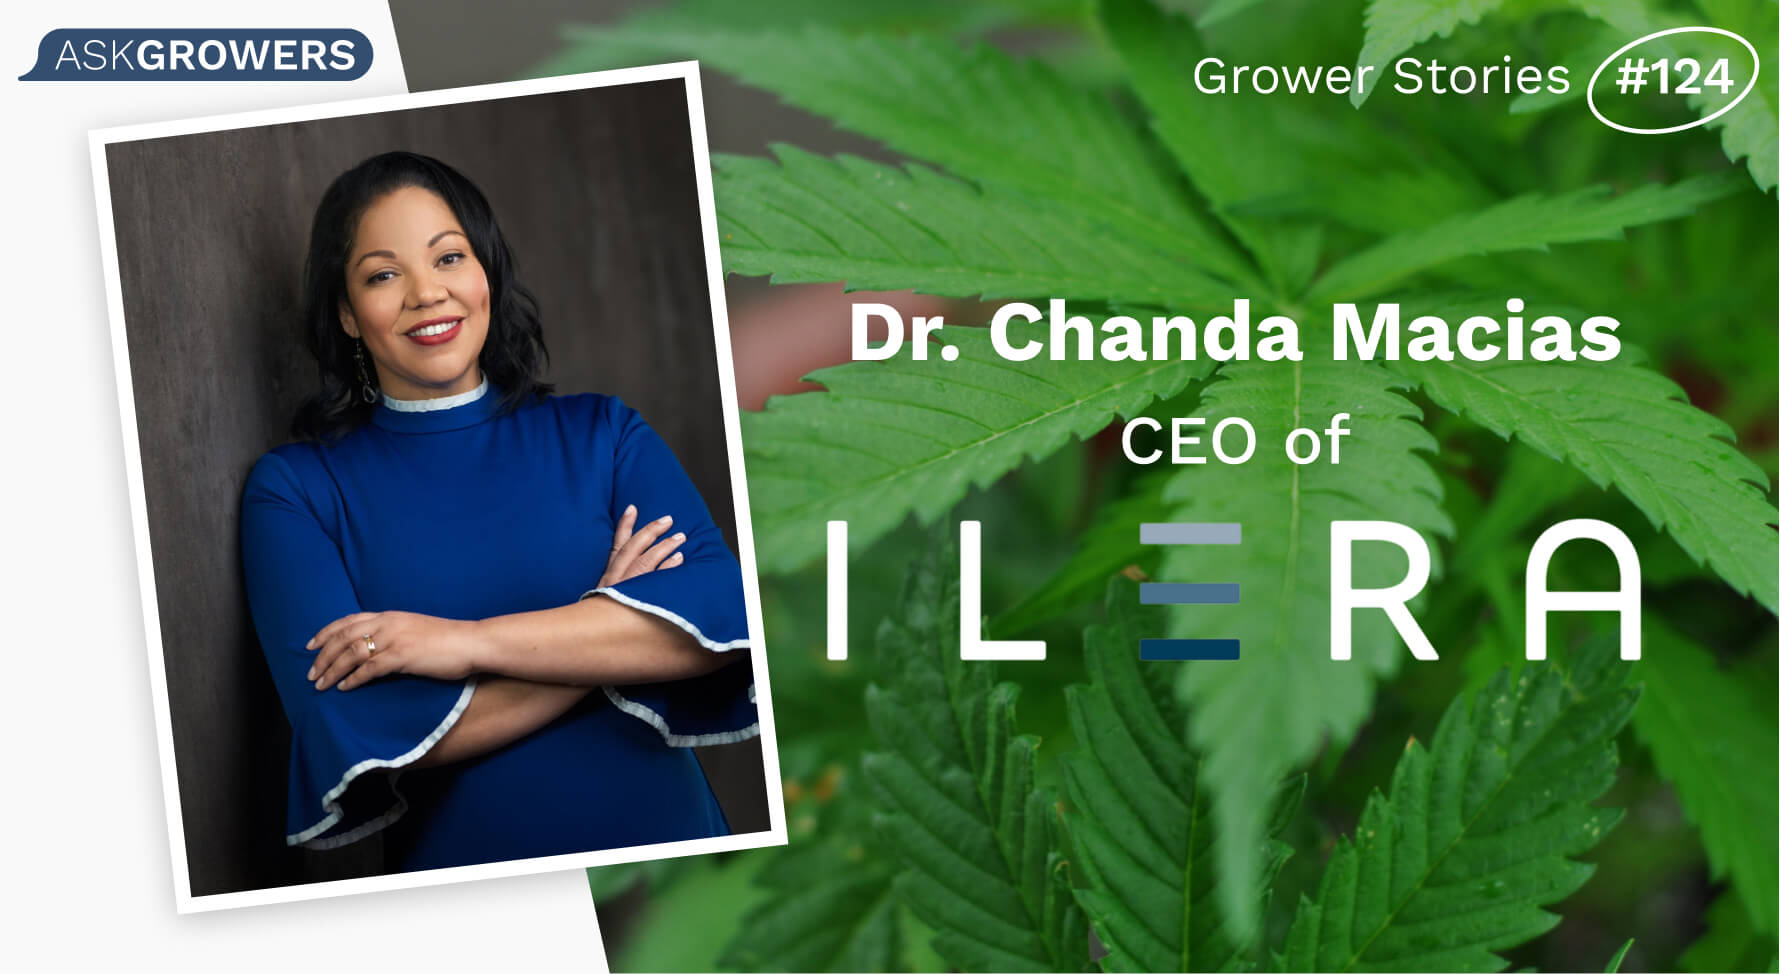 Grower Stories #124: Dr. Chanda Macias